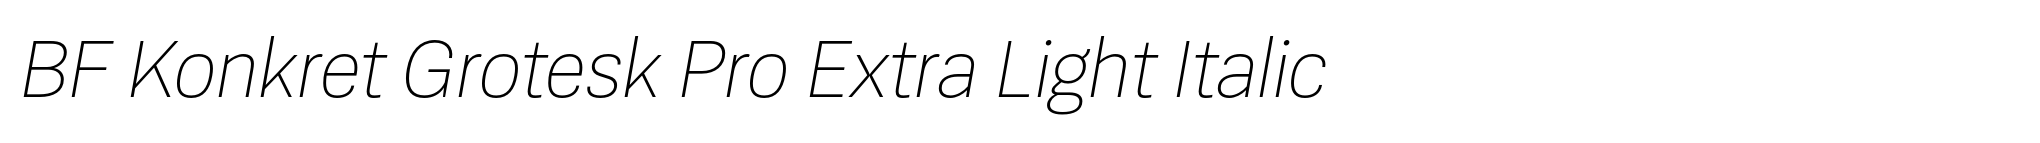 BF Konkret Grotesk Pro Extra Light Italic image